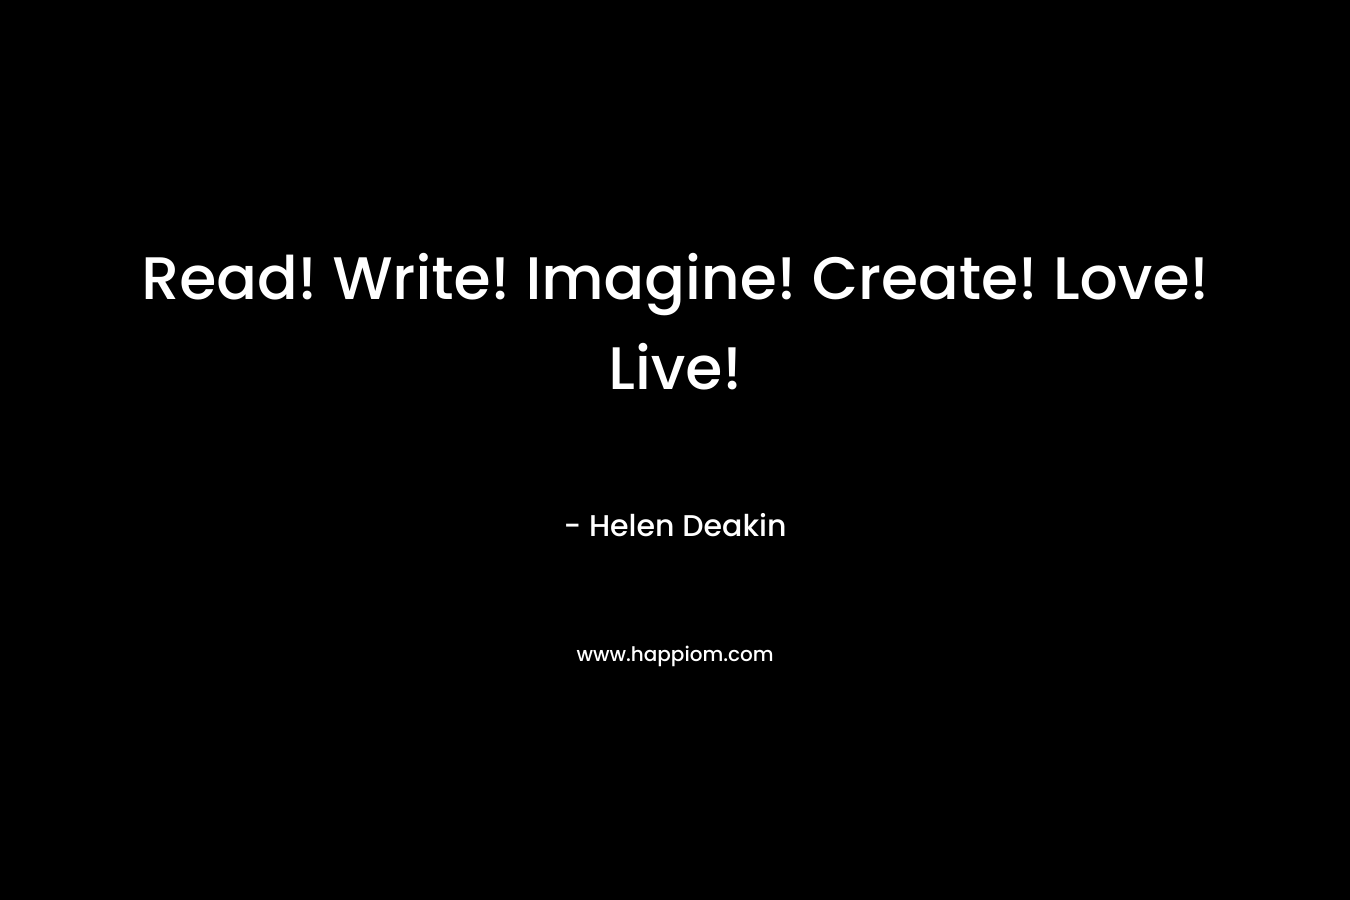 Read! Write! Imagine! Create! Love! Live!